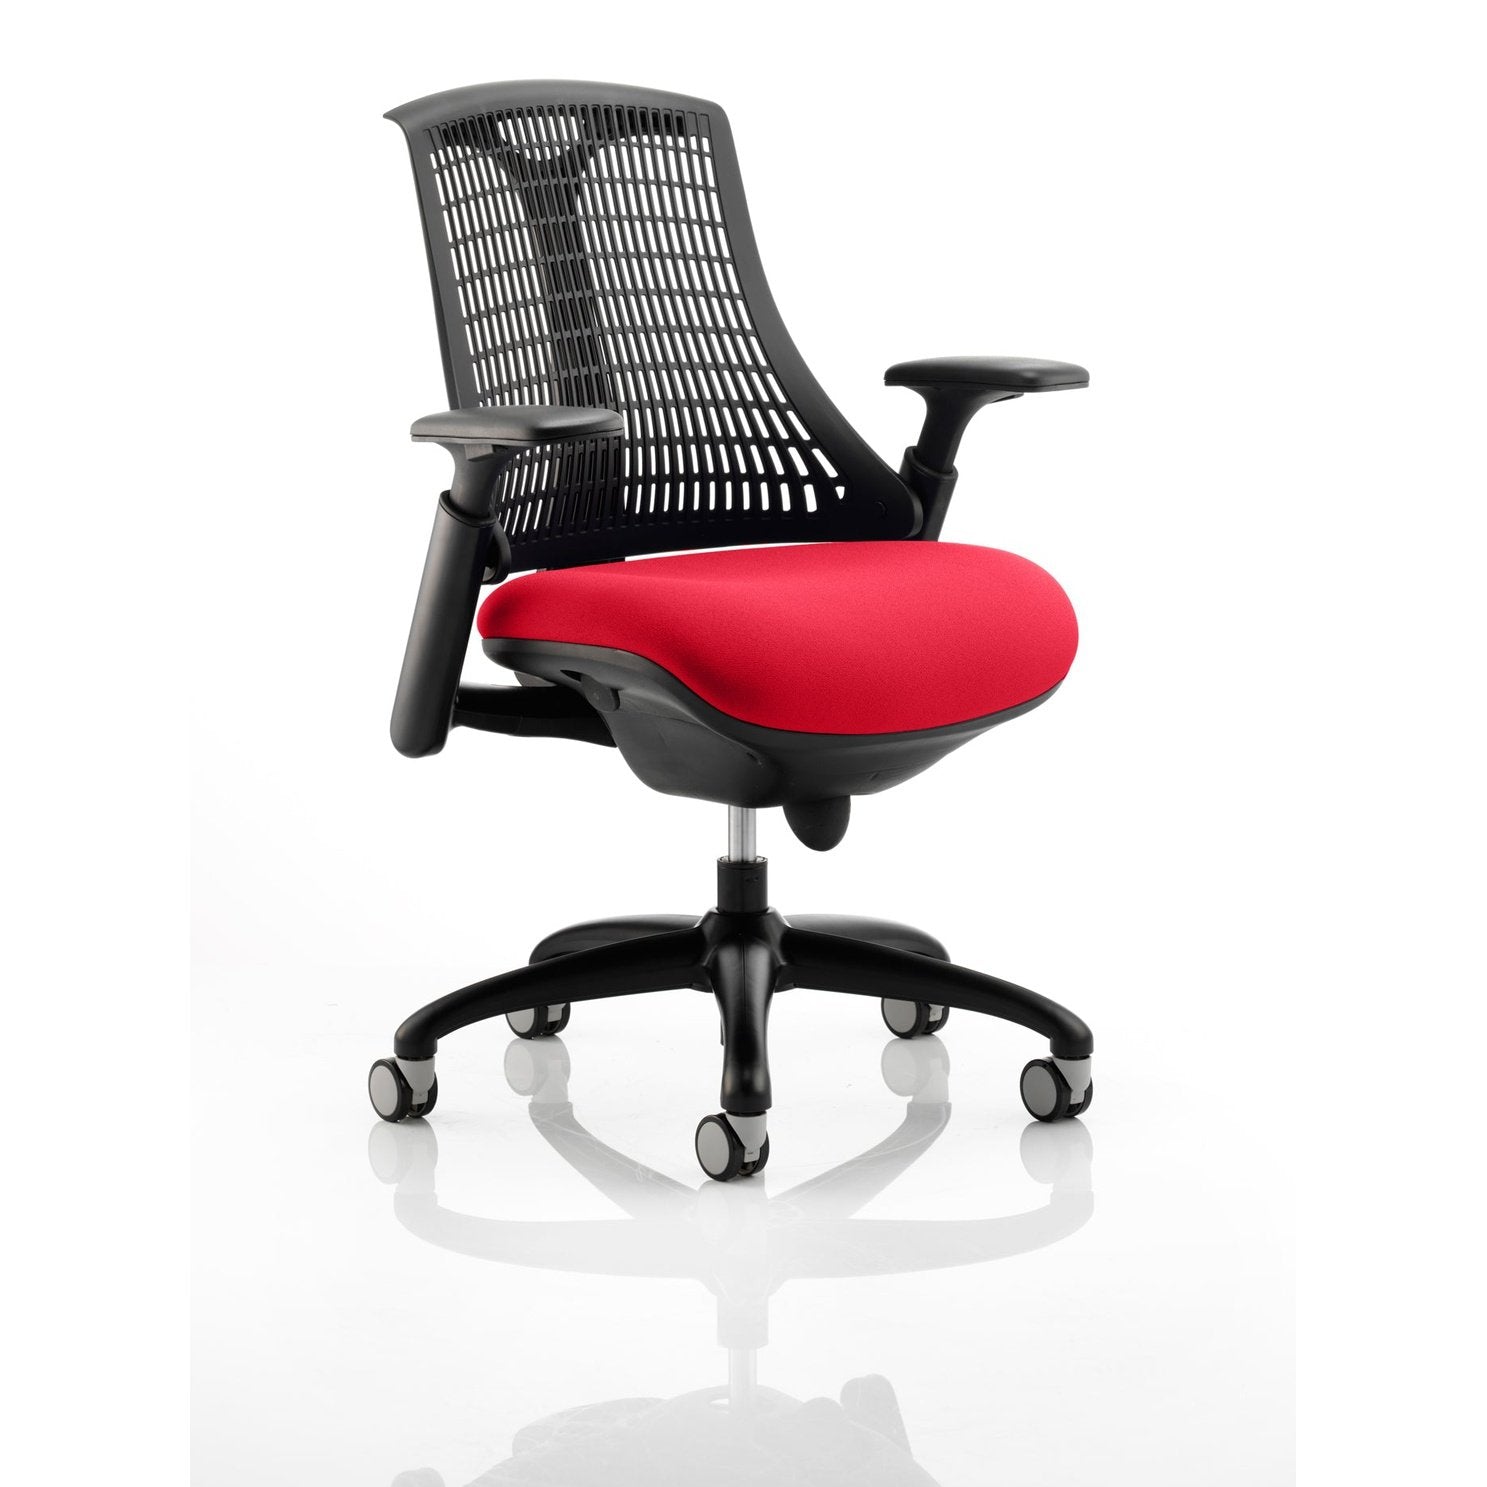 Flex Medium Back Task Operator Office Chair - Black Frame, Mesh & Fabric, Adjustable Arms, 110kg Capacity, 8hr Use, Flat Packed - 2Yr Mechanism Warranty